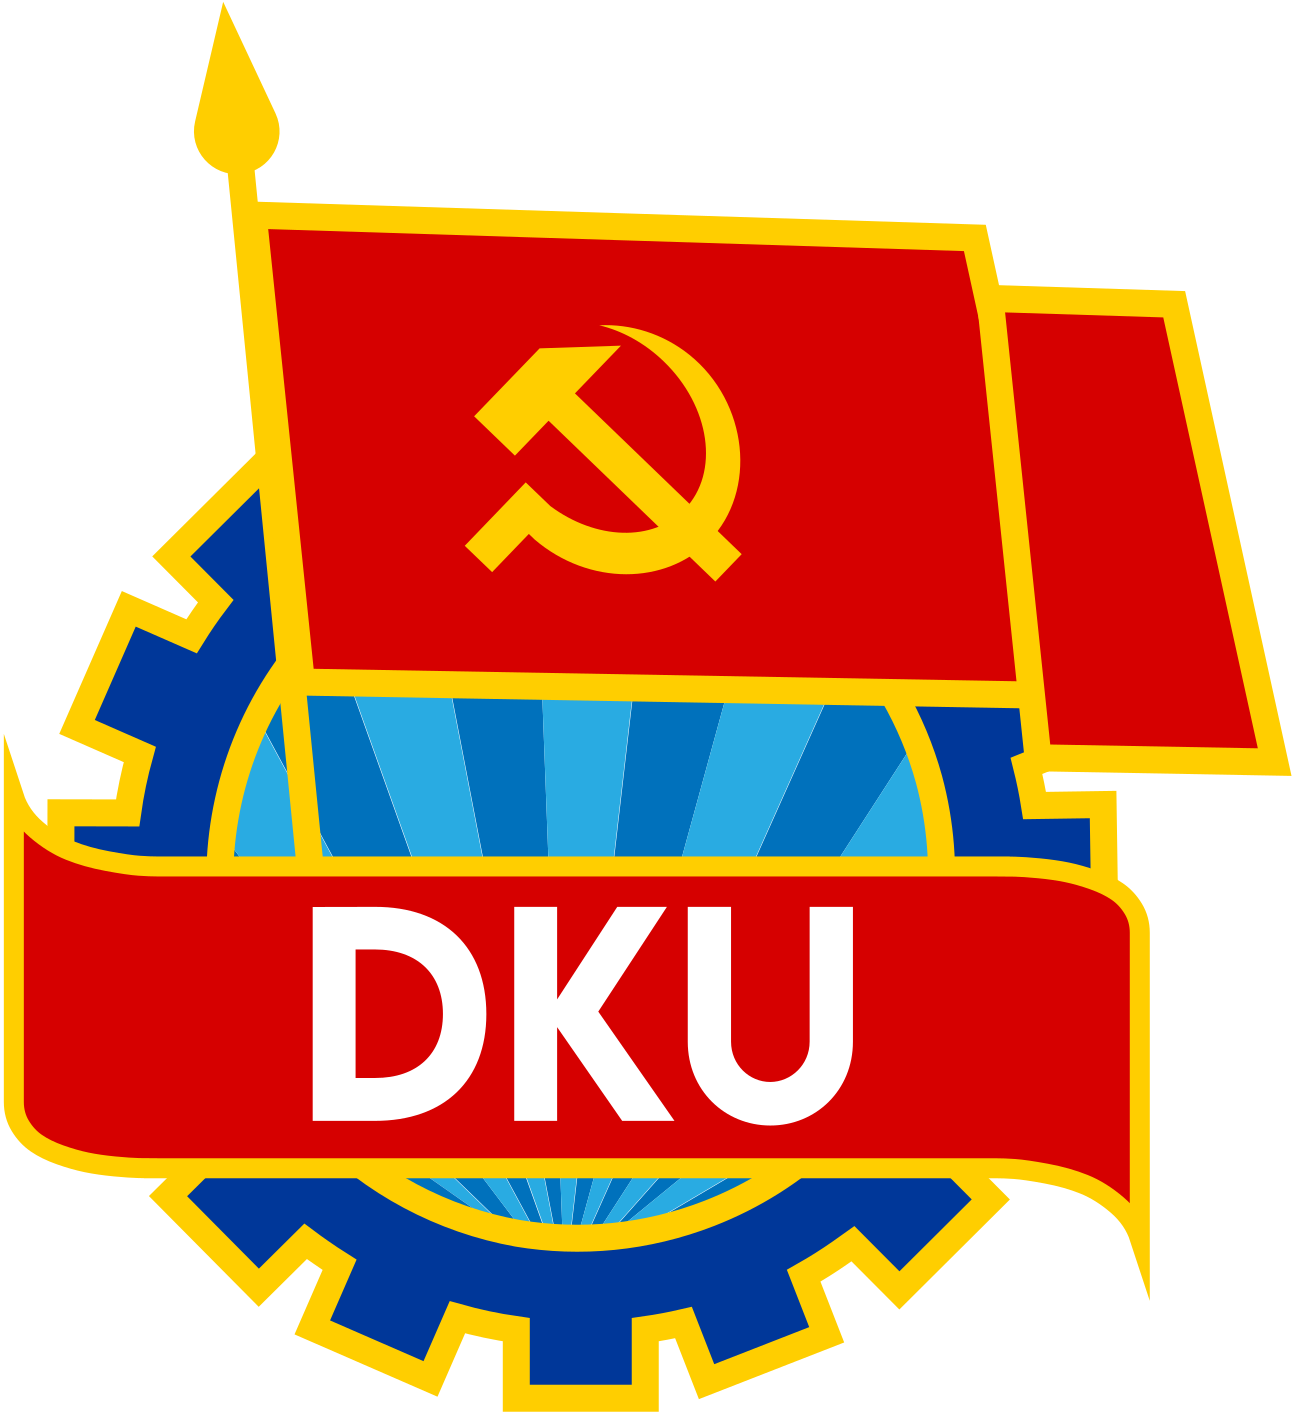 DKU – Danmarks Kommunistiske Ungdom